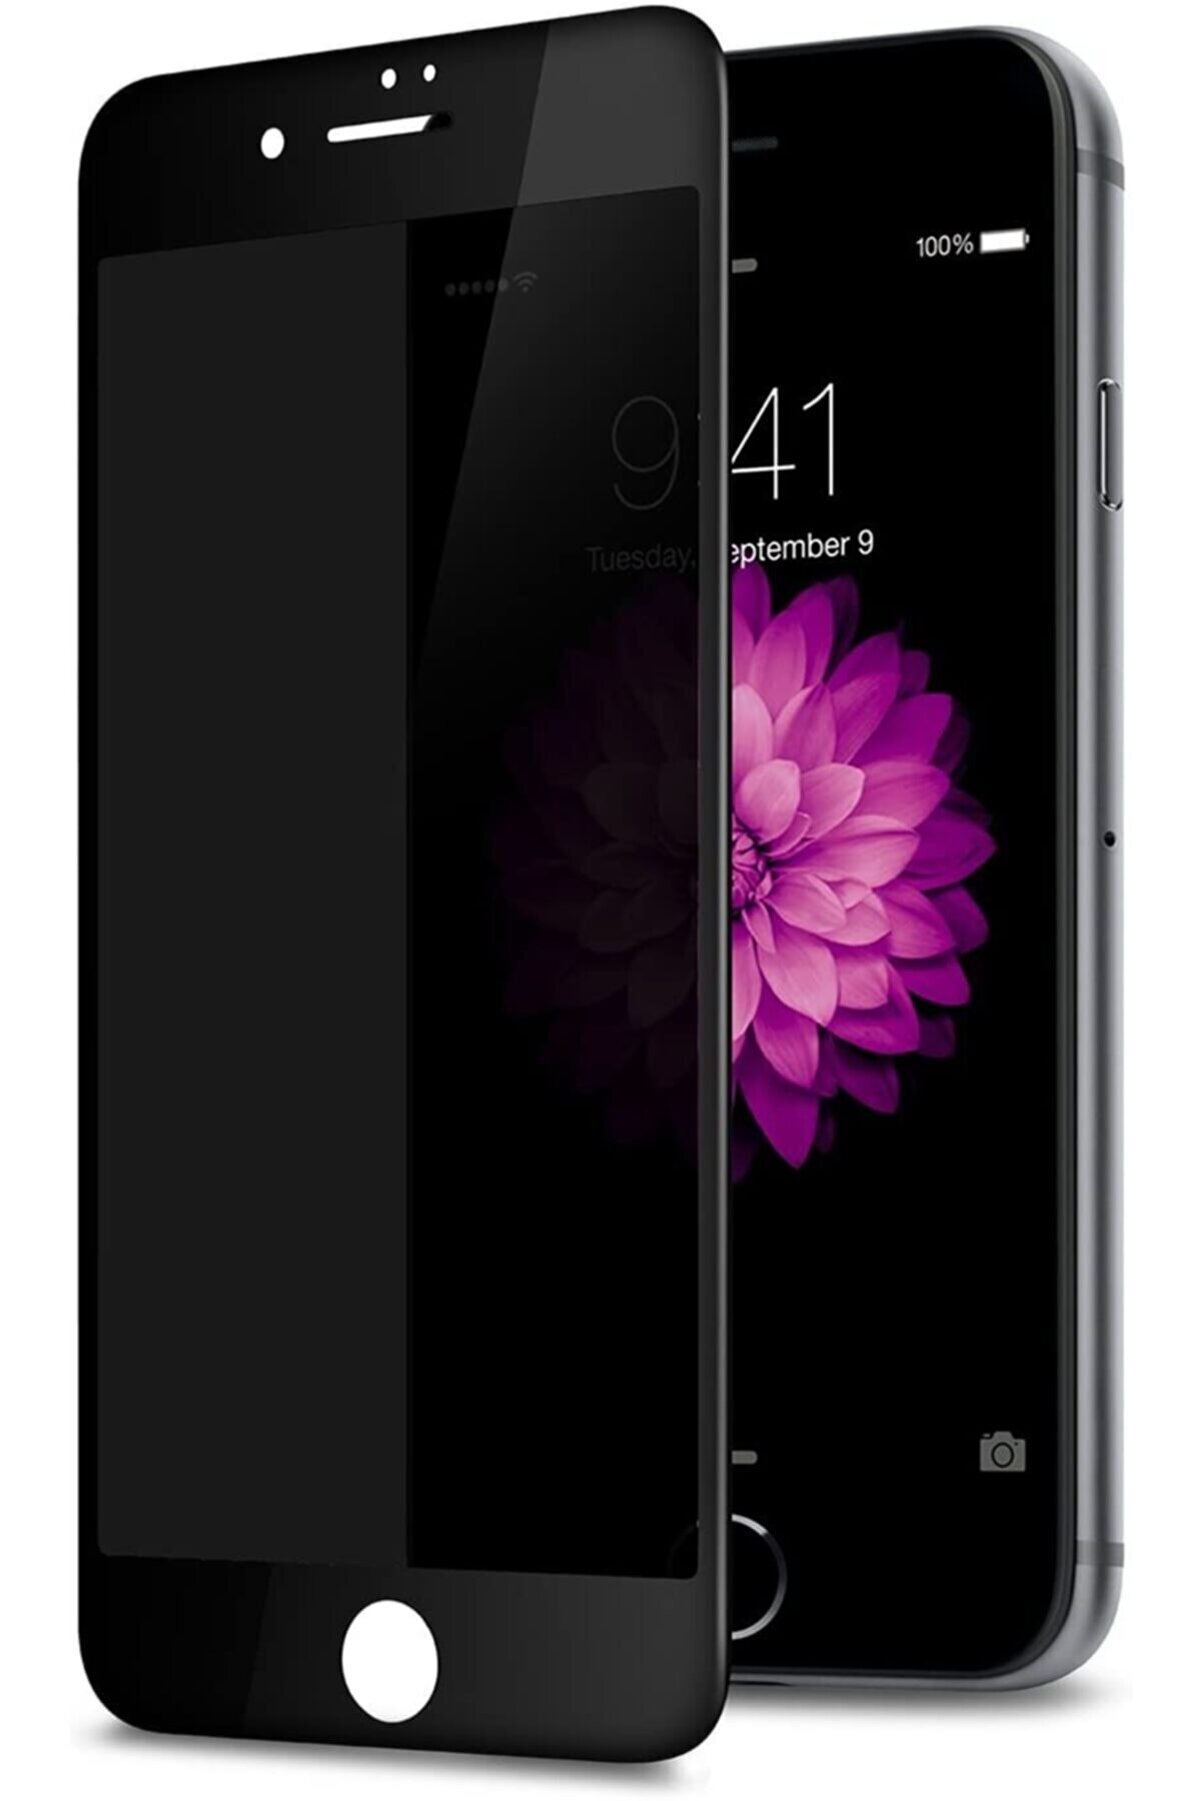 ROBEVE Iphone 7 - Iphone 8 Uyumlu Hayalet Ekran Koruyucu Hayalet Cam Kırılmaz Cam Ekran Koruyucu Siyah